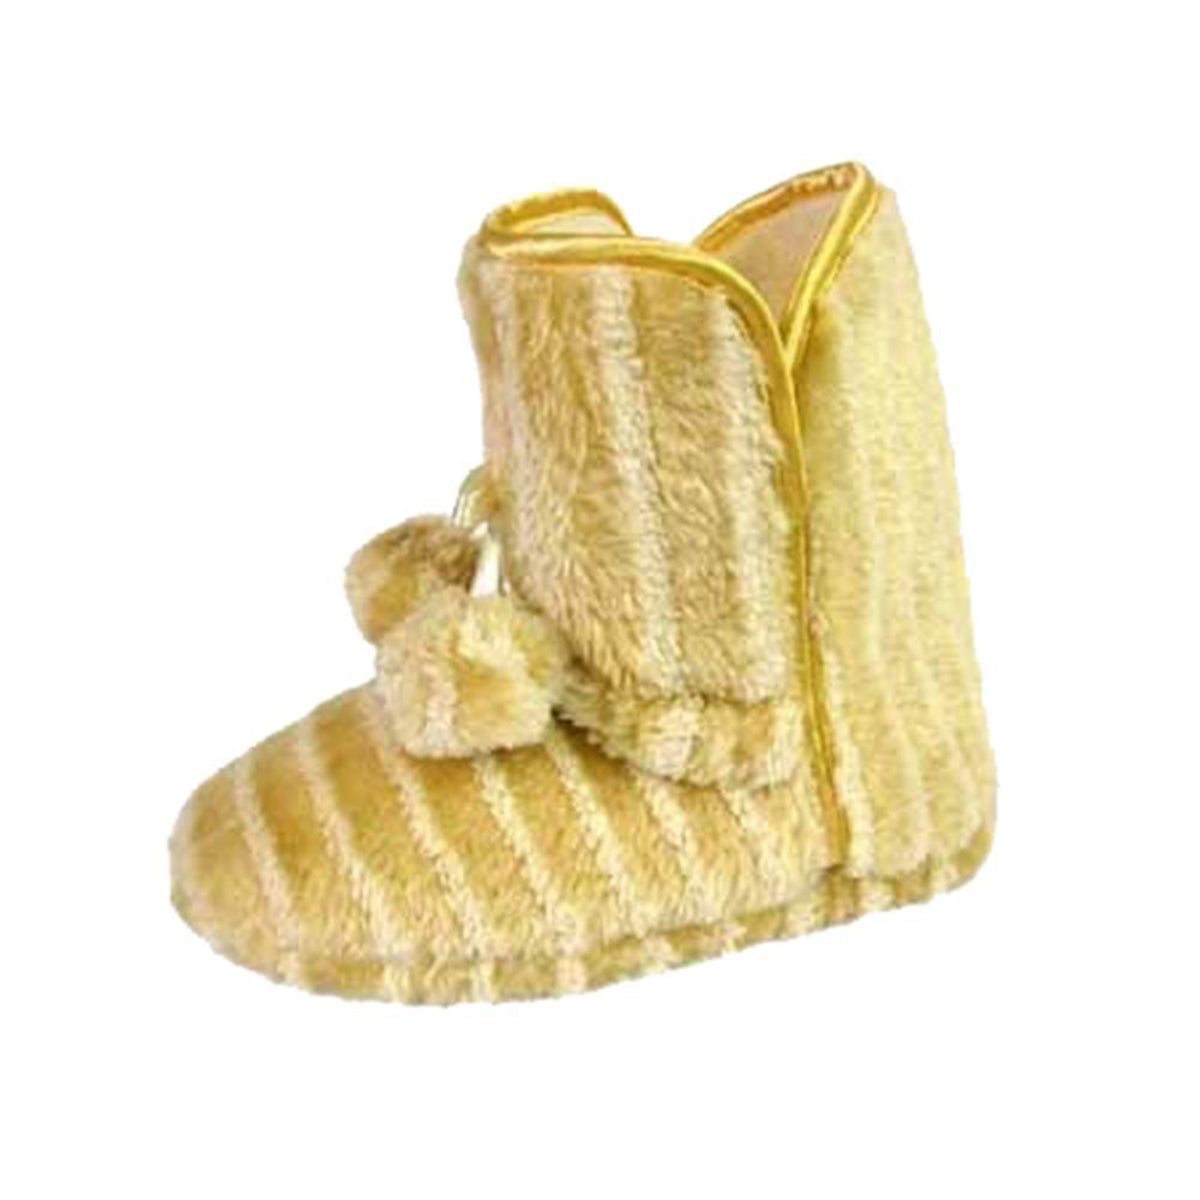 Beige / cream striped slippers slipper boots